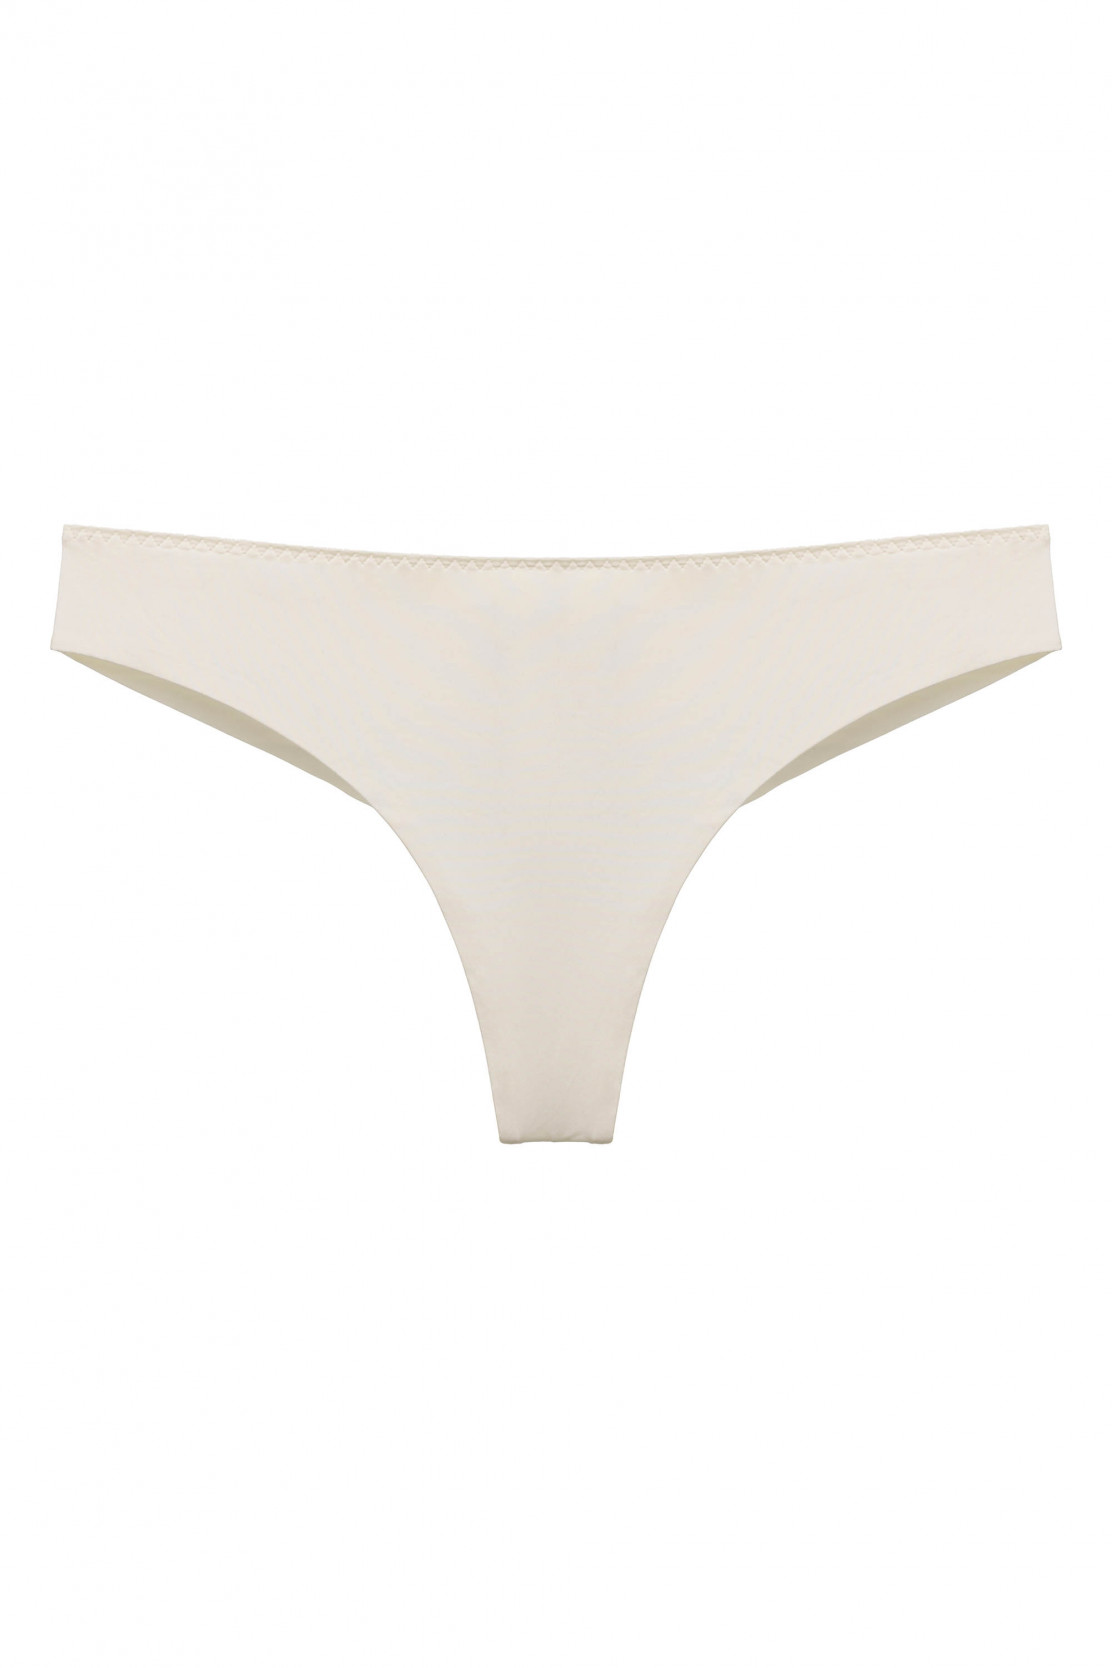 200-12 Thong Panty SALE (1 pc) 251 white buy at the best price in Kiev,  Kharkov, Odessa, Dnipro, Ukraine, Anabel-arto